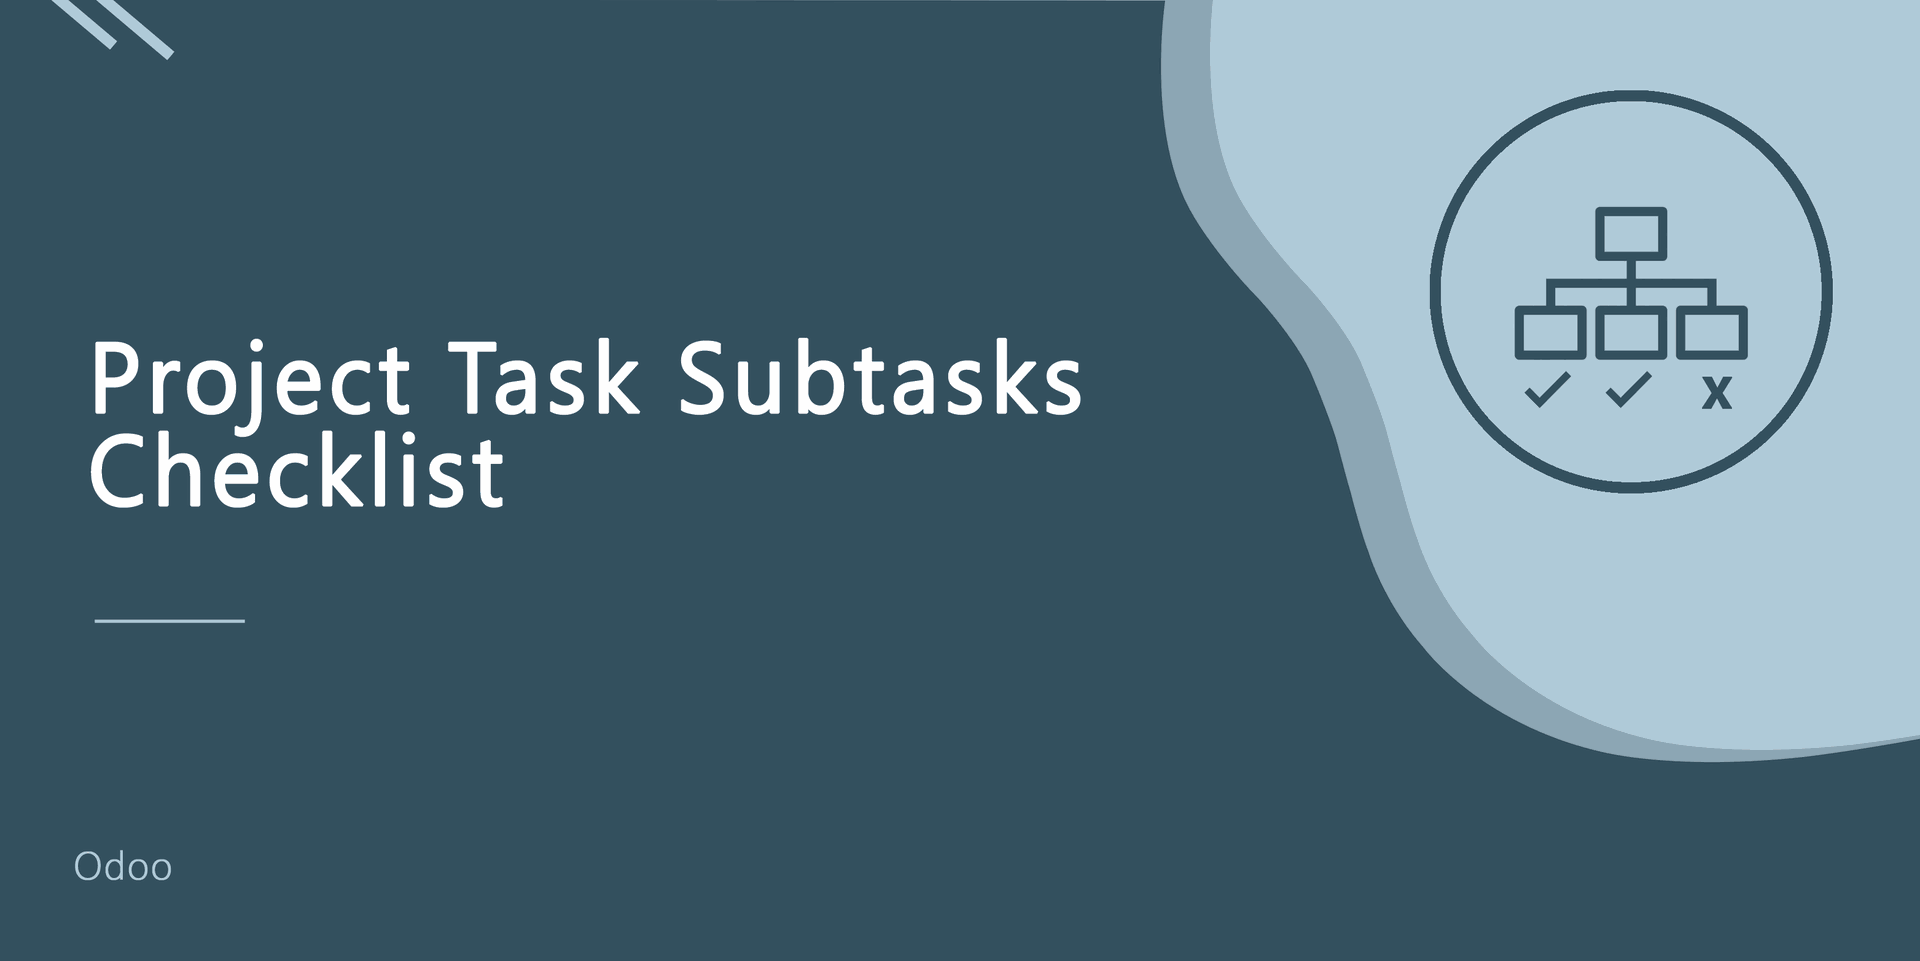 Task Subtasks Checklist
